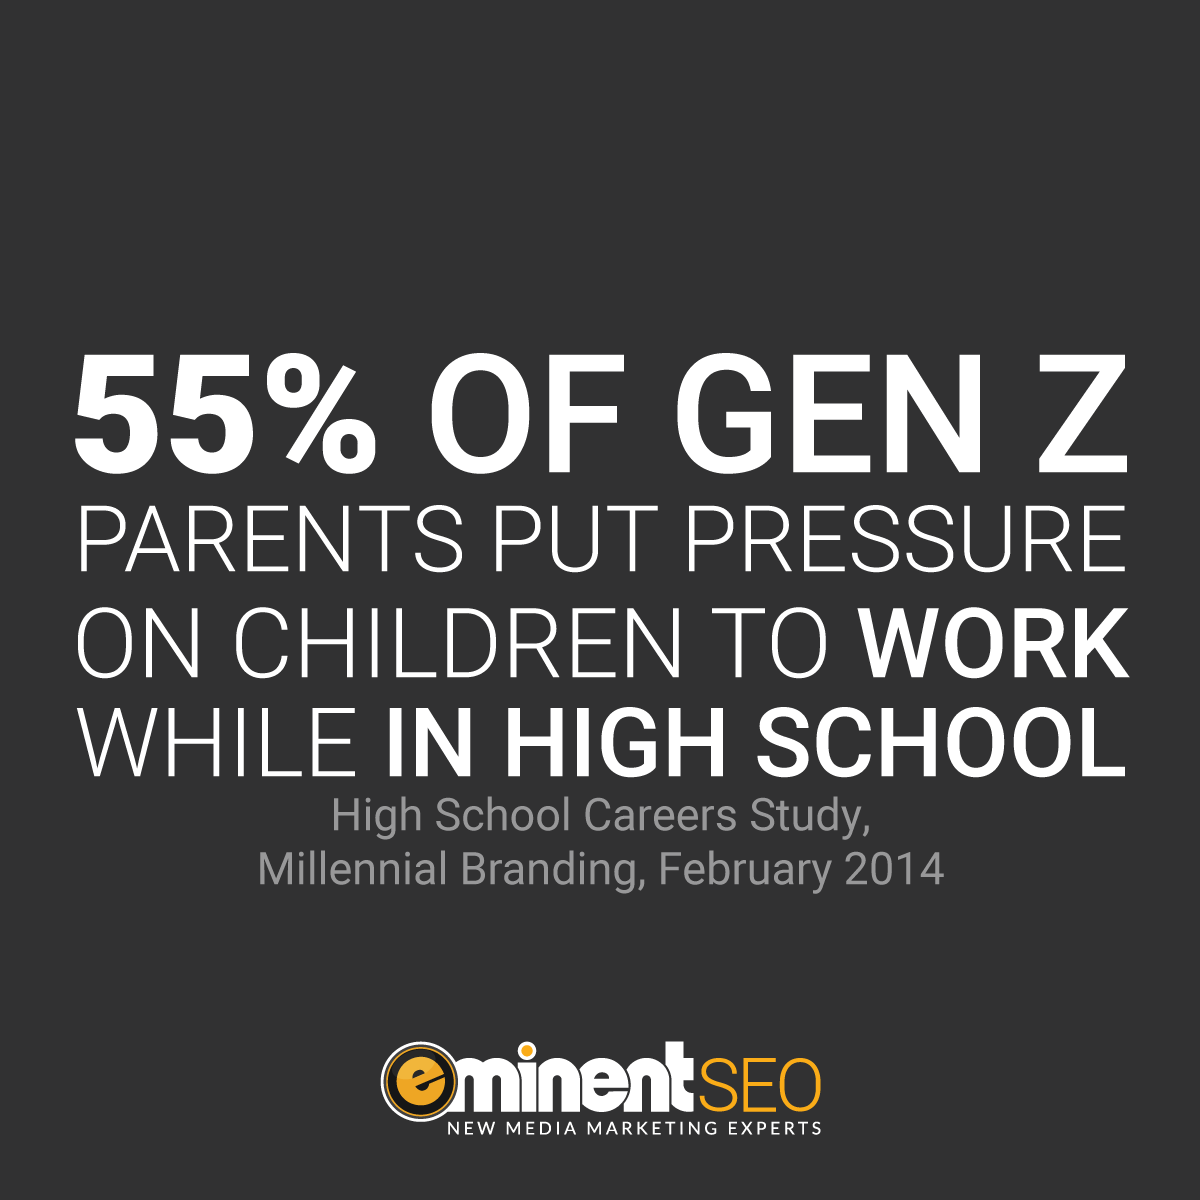 Generation Z Parents Want Children To Work In High School - Eminent SEO